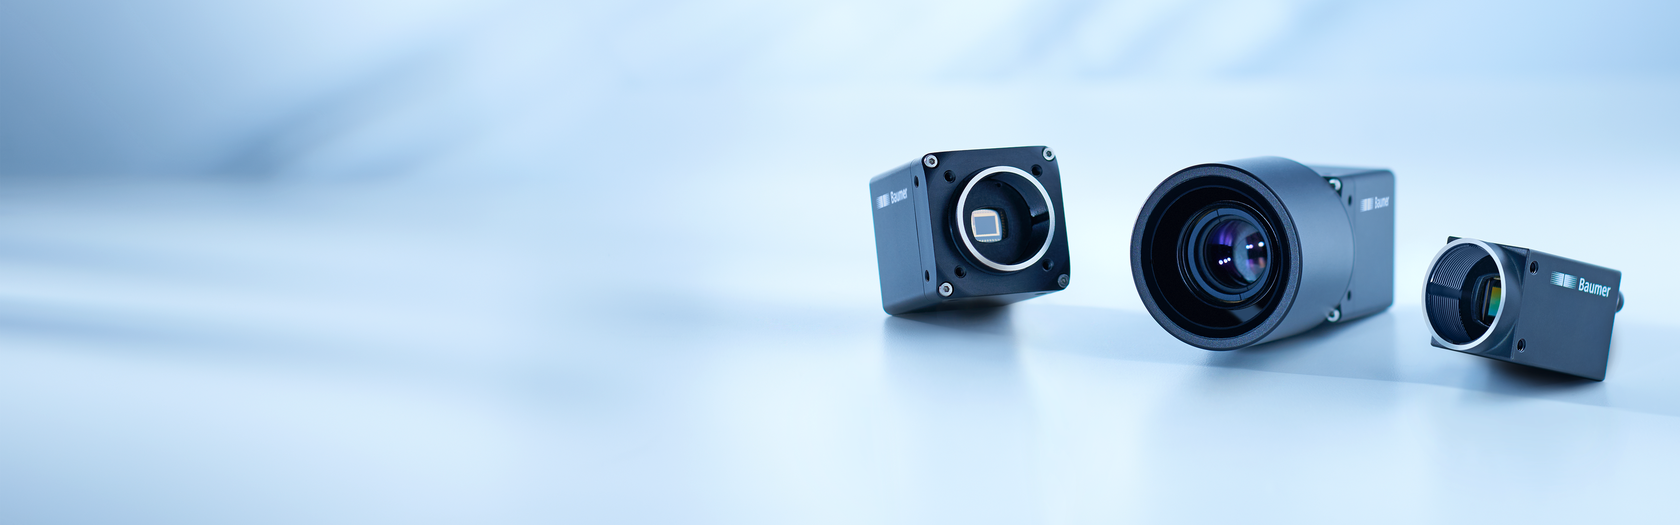 Versatile industrial cameras with cutting-edge CMOS sensors